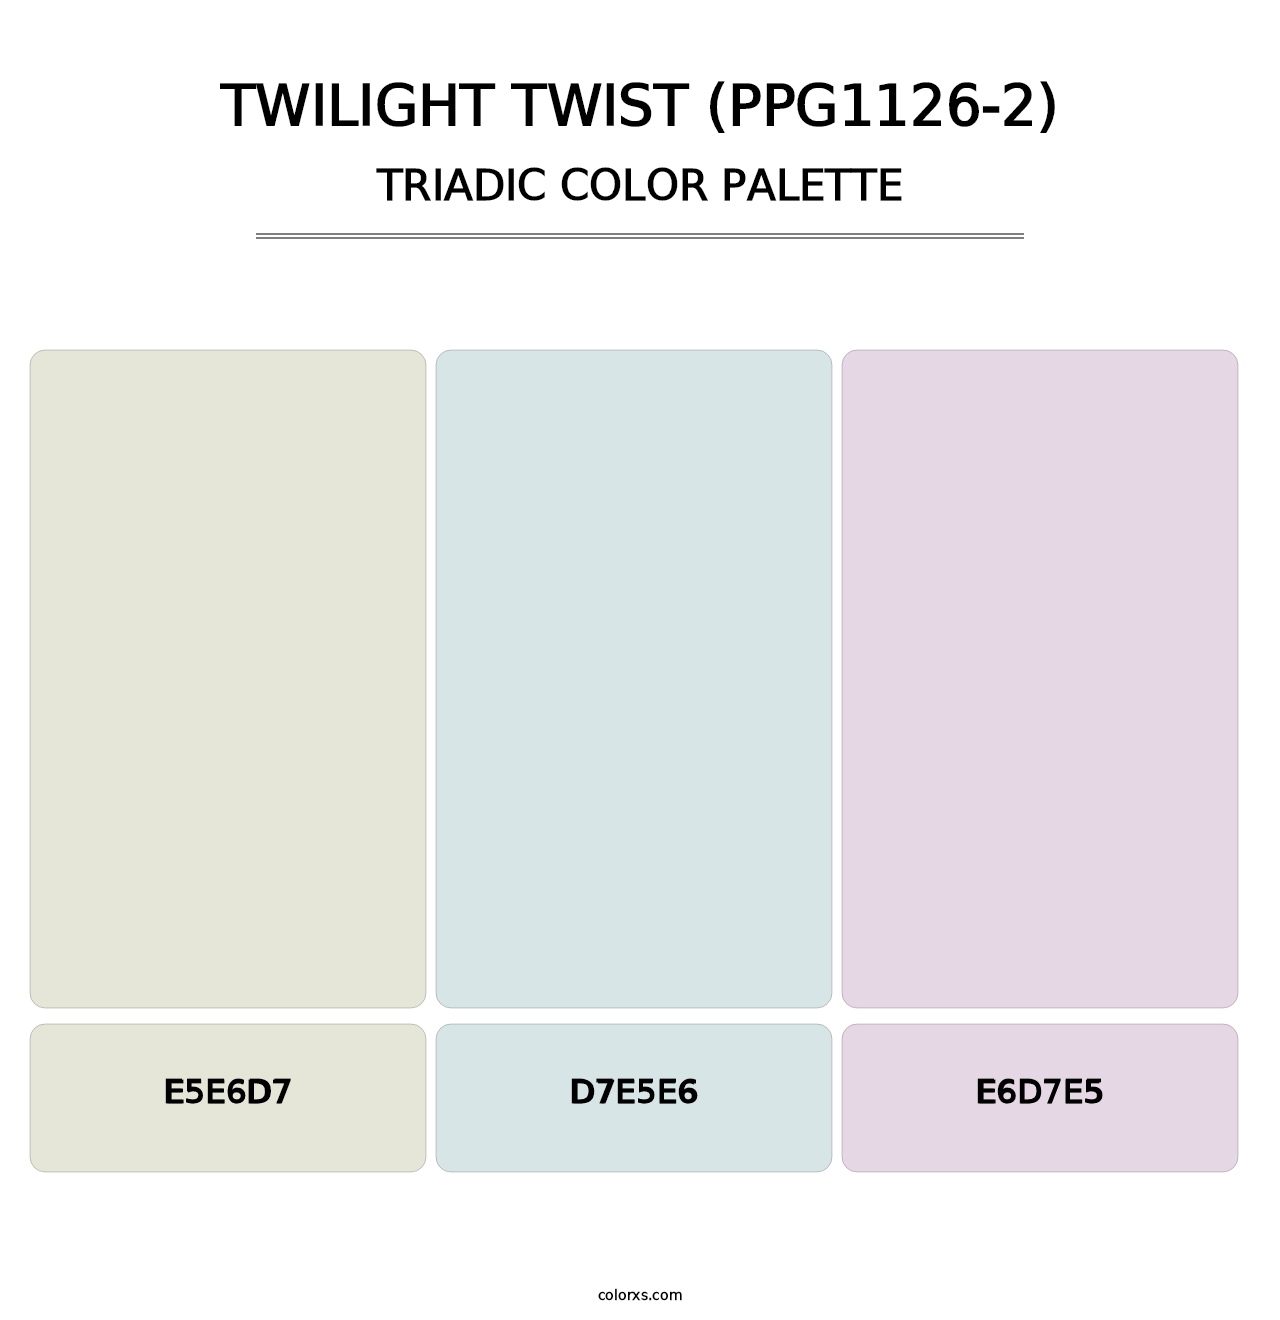 Twilight Twist (PPG1126-2) - Triadic Color Palette